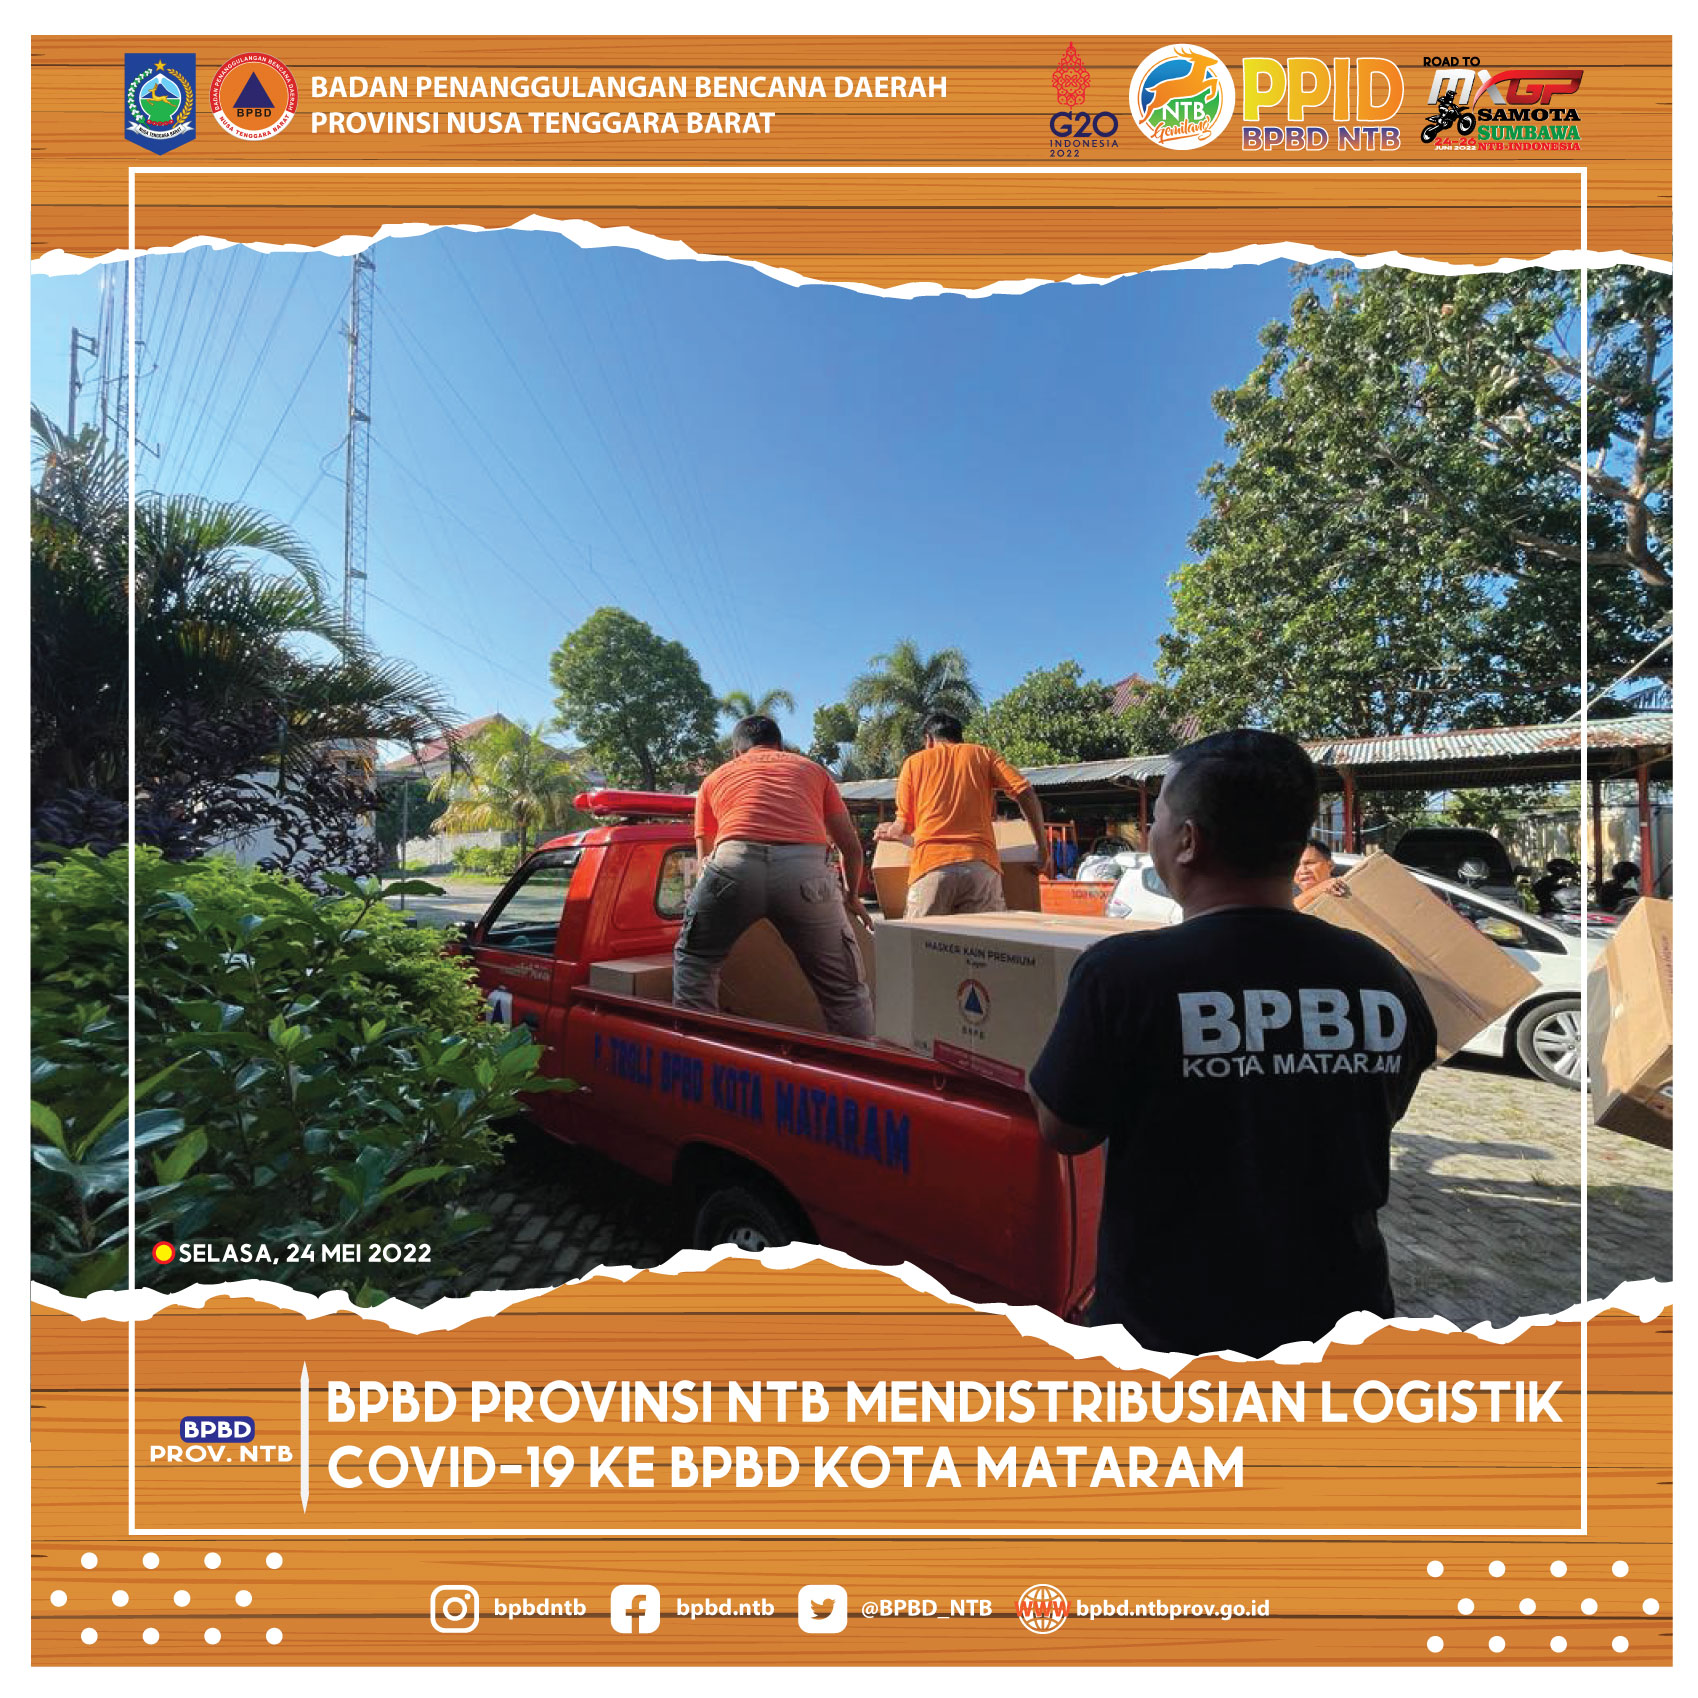 BPBD Provinsi NTB Mendistribusian Logistik Covid-19 ke BPBD Kota Mataram (Selasa, 23 Mei 2022)